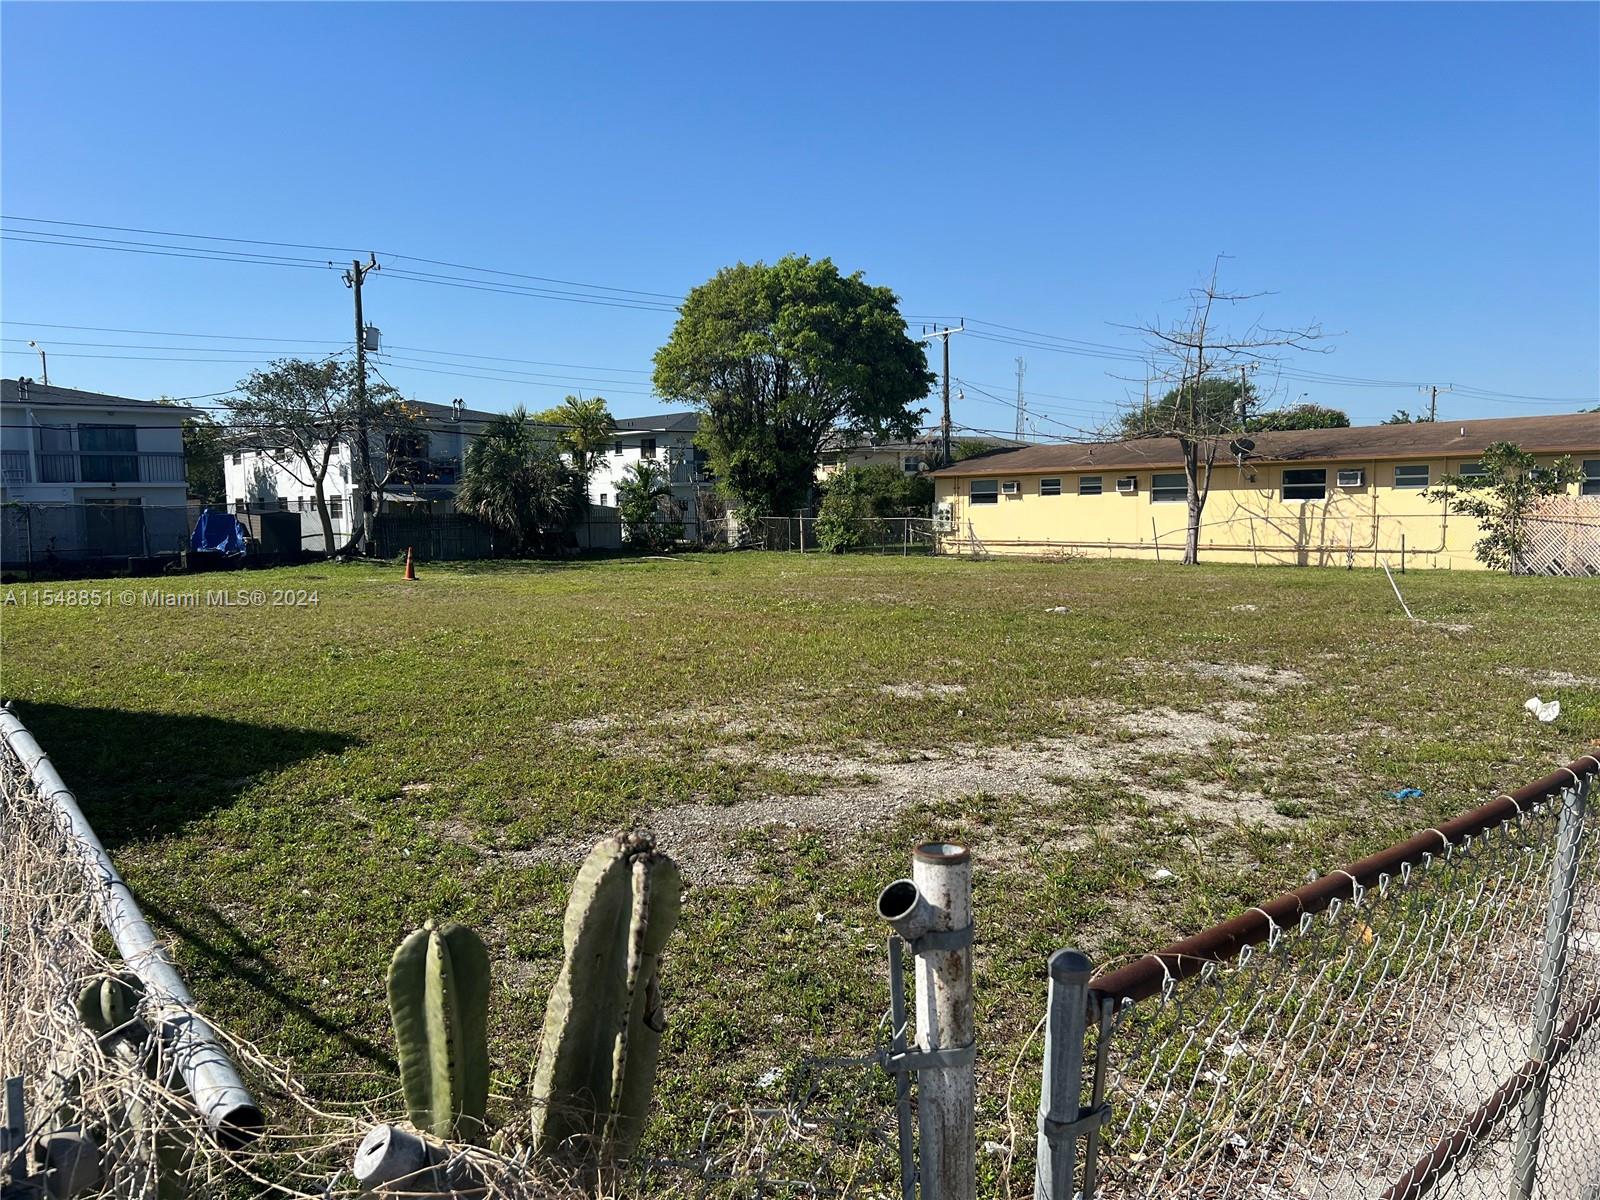 Rental Property at 250 E 9th St, Hialeah, Miami-Dade County, Florida -  - $2,300,000 MO.